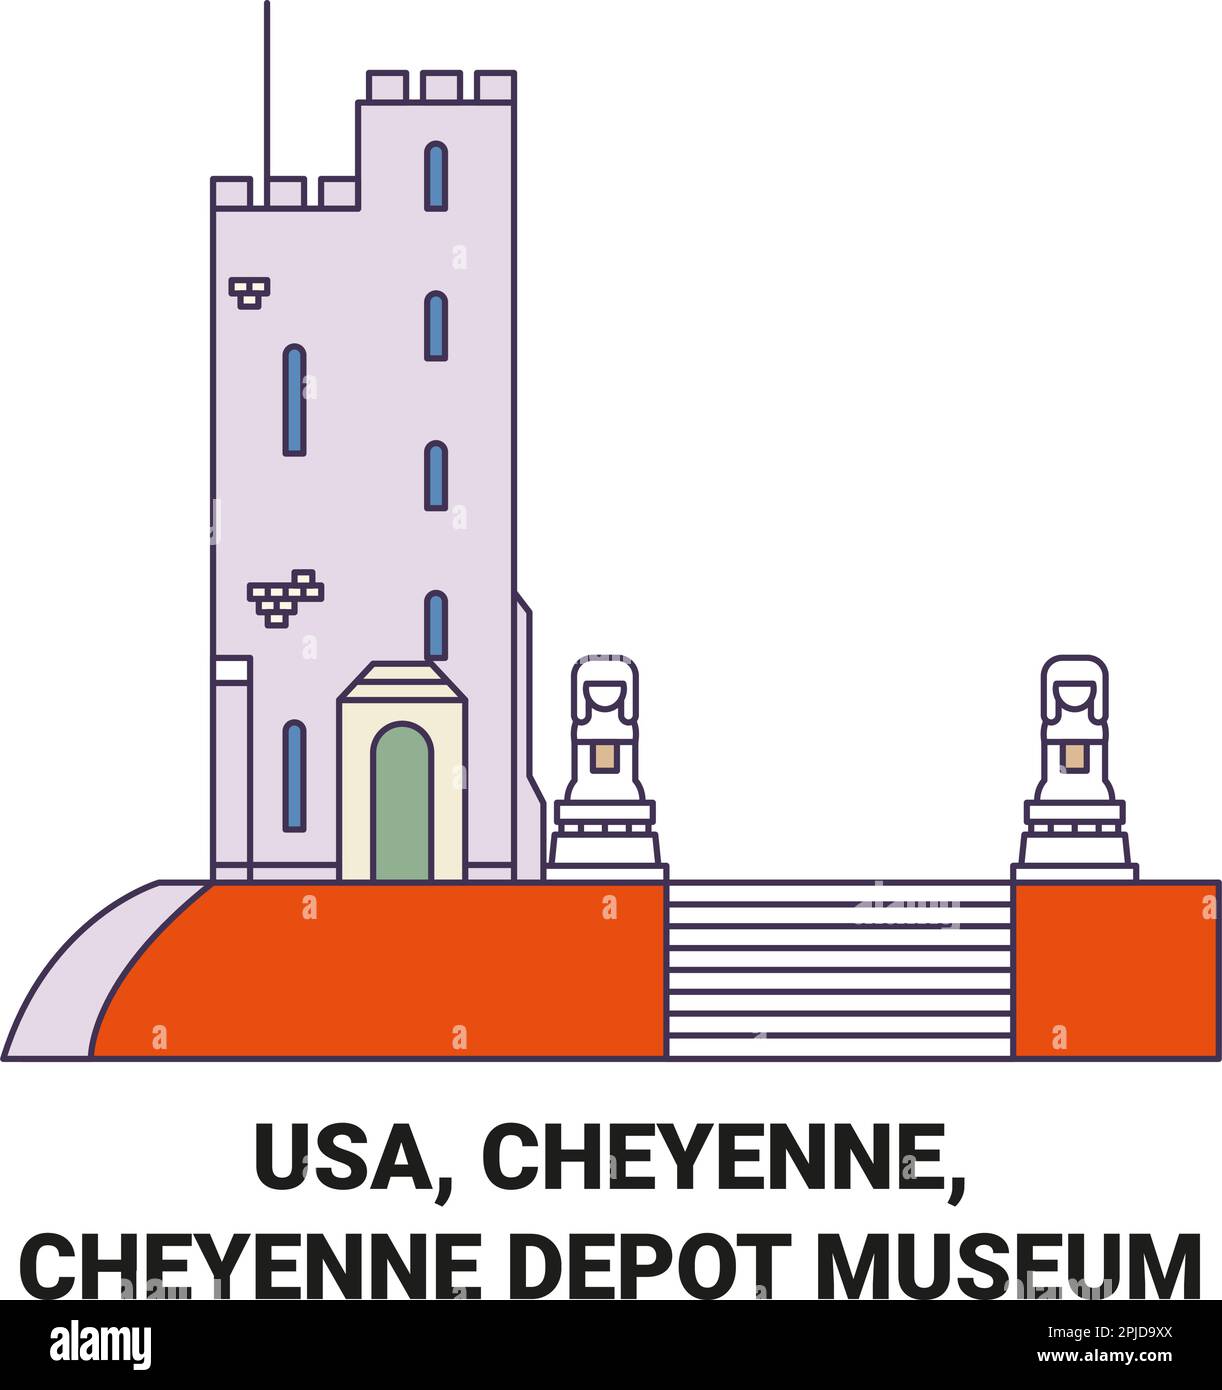 Usa, Cheyenne, Cheyenne Depot Museum travel landmark vector illustration Stock Vector